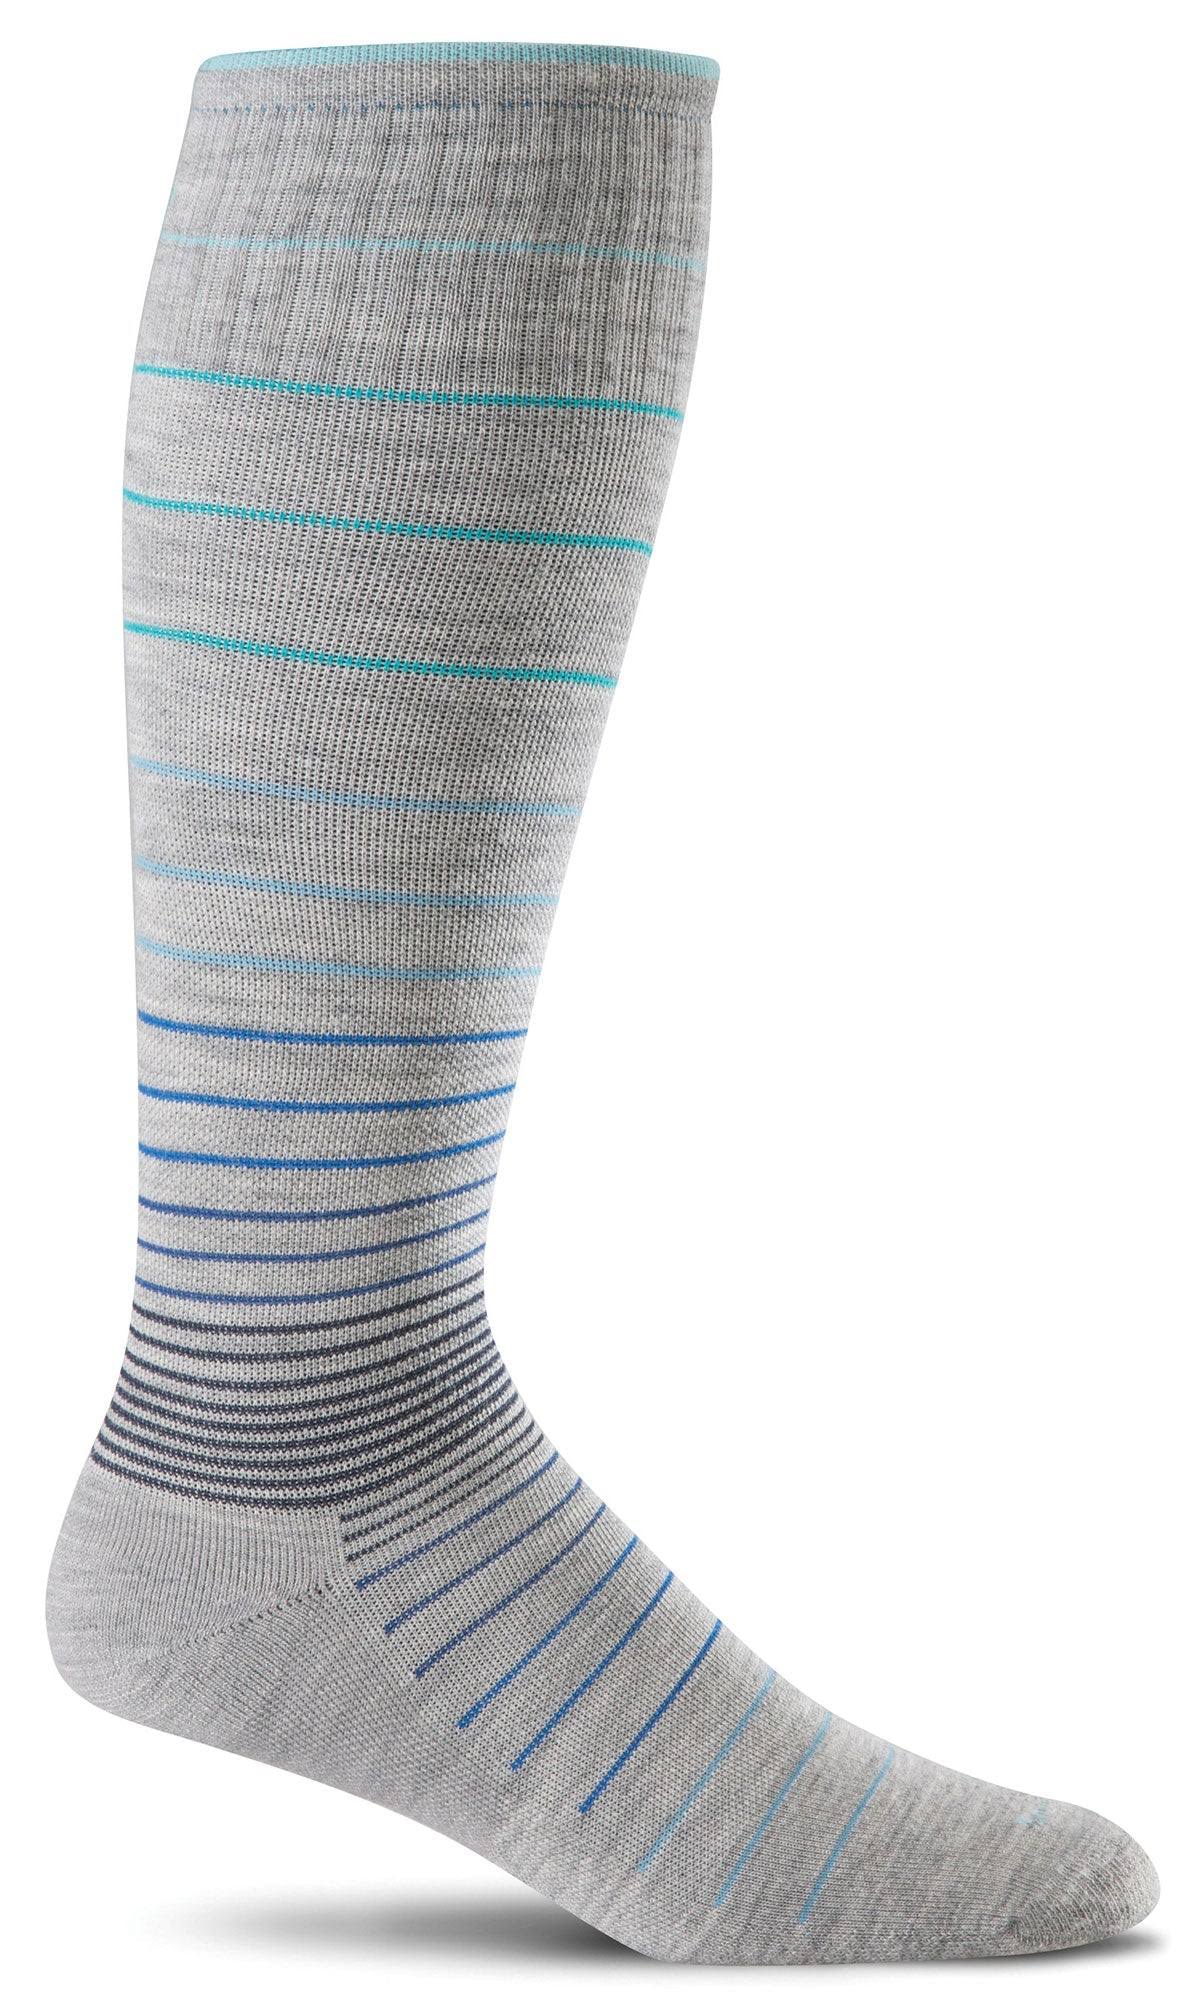 Sockwell Women's Circulator Graduated Compression Socks - Grey, S/M